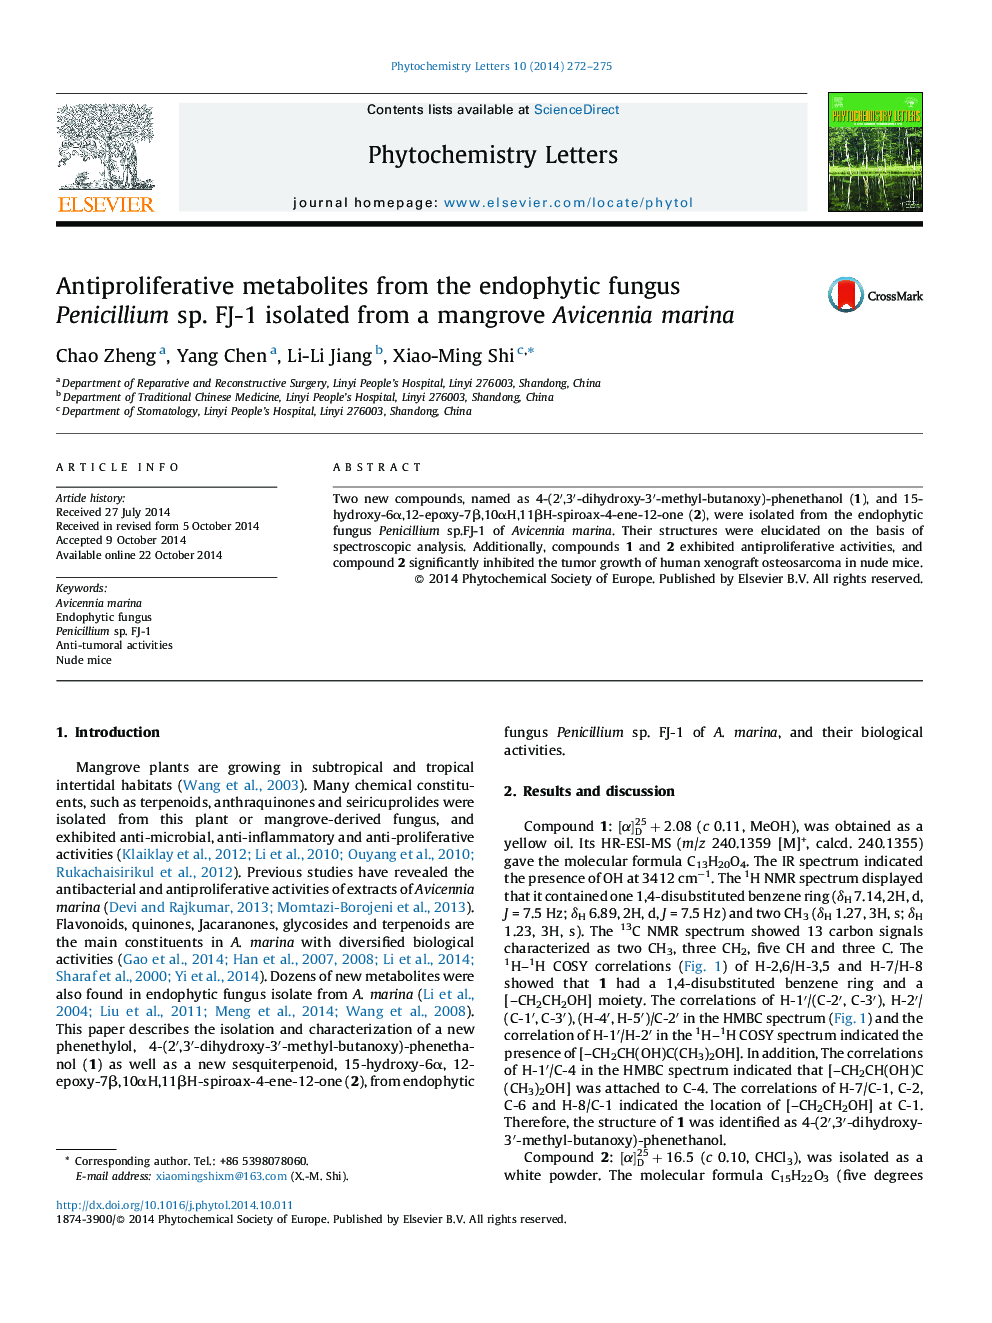 Antiproliferative metabolites from the endophytic fungus Penicillium sp. FJ-1 isolated from a mangrove Avicennia marina